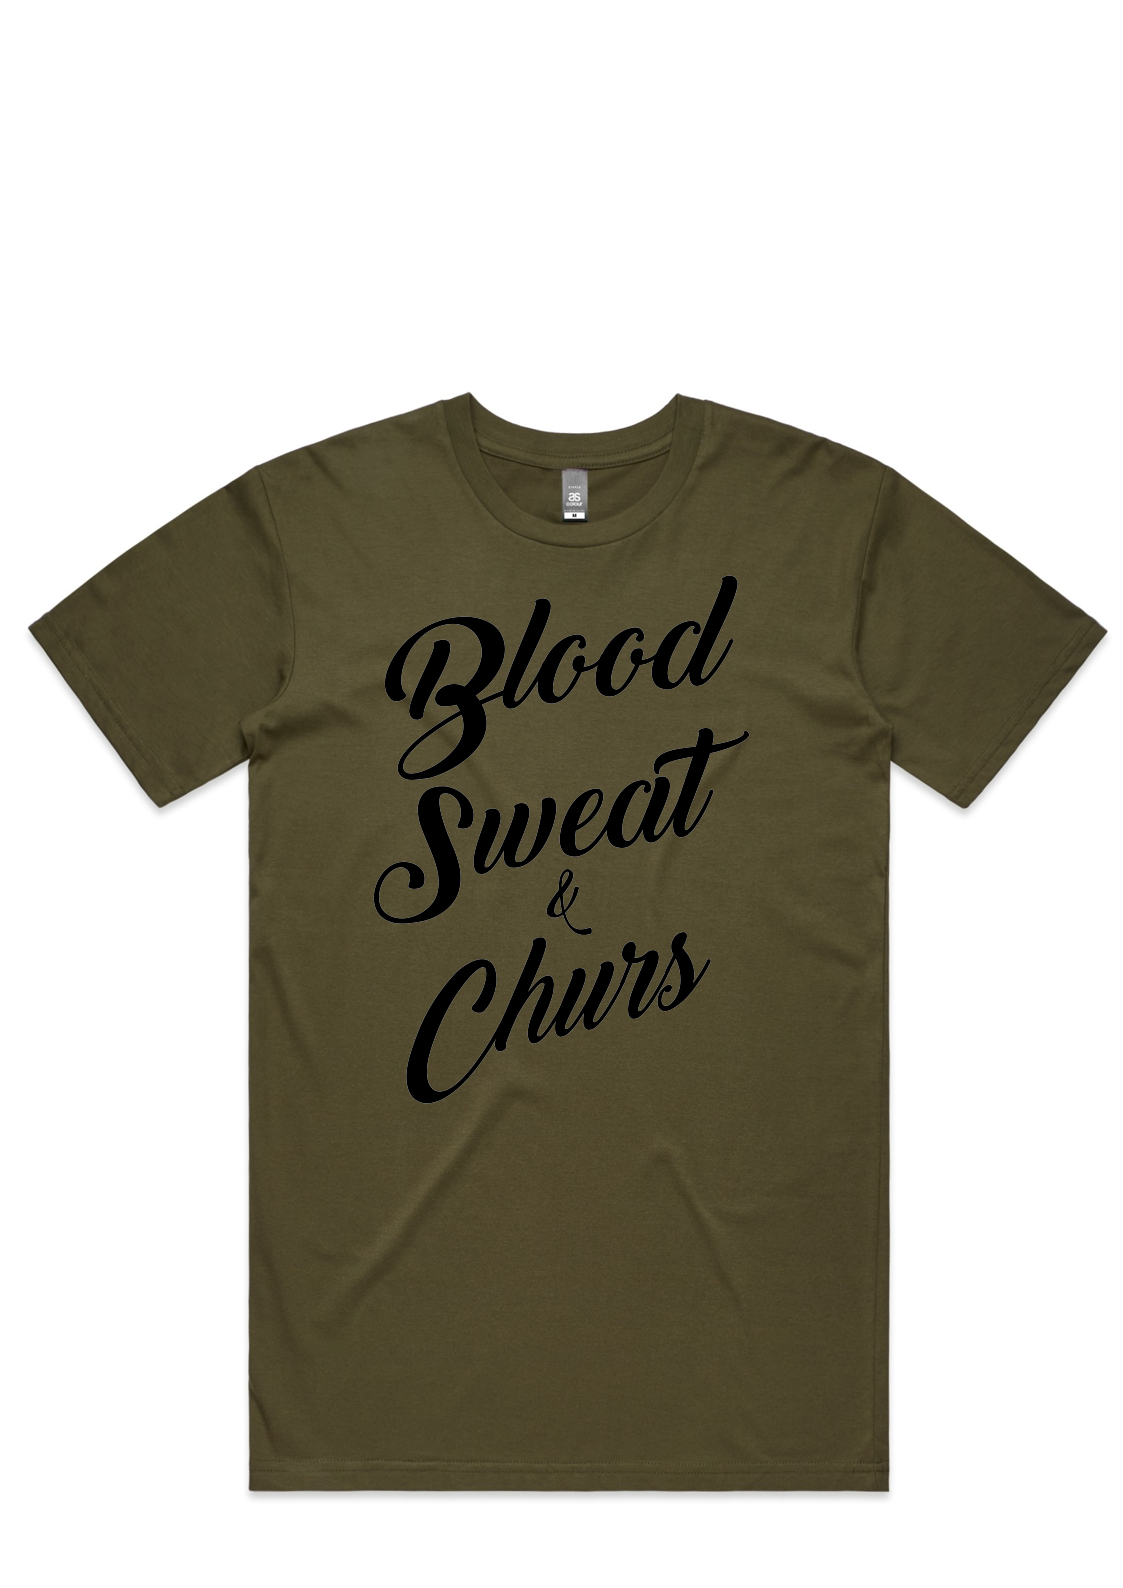 Blood Sweat & Churs